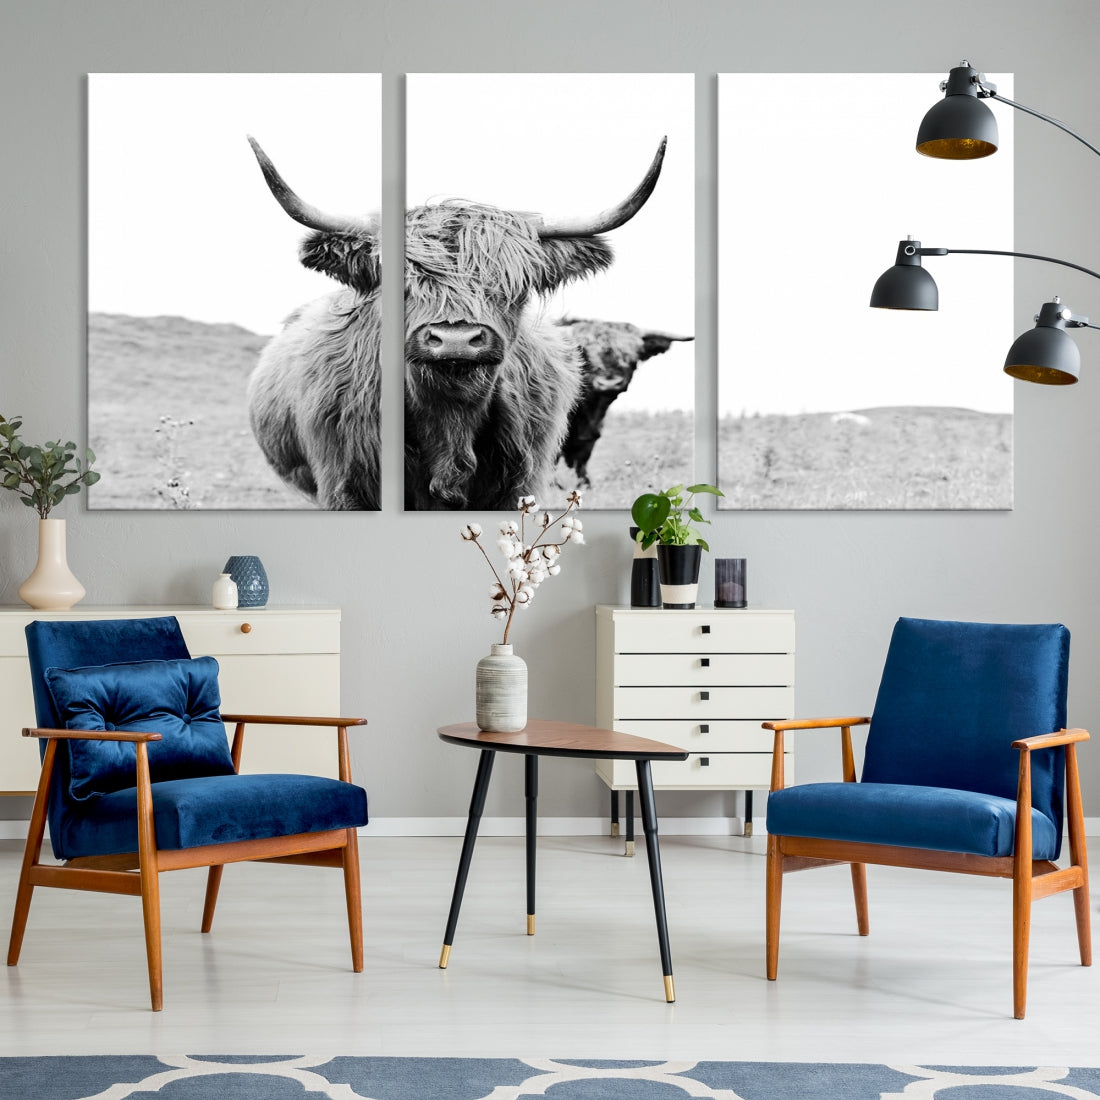 Black and White Highland Cow Canvas Wall Art Print Farmhouse Animal Decor